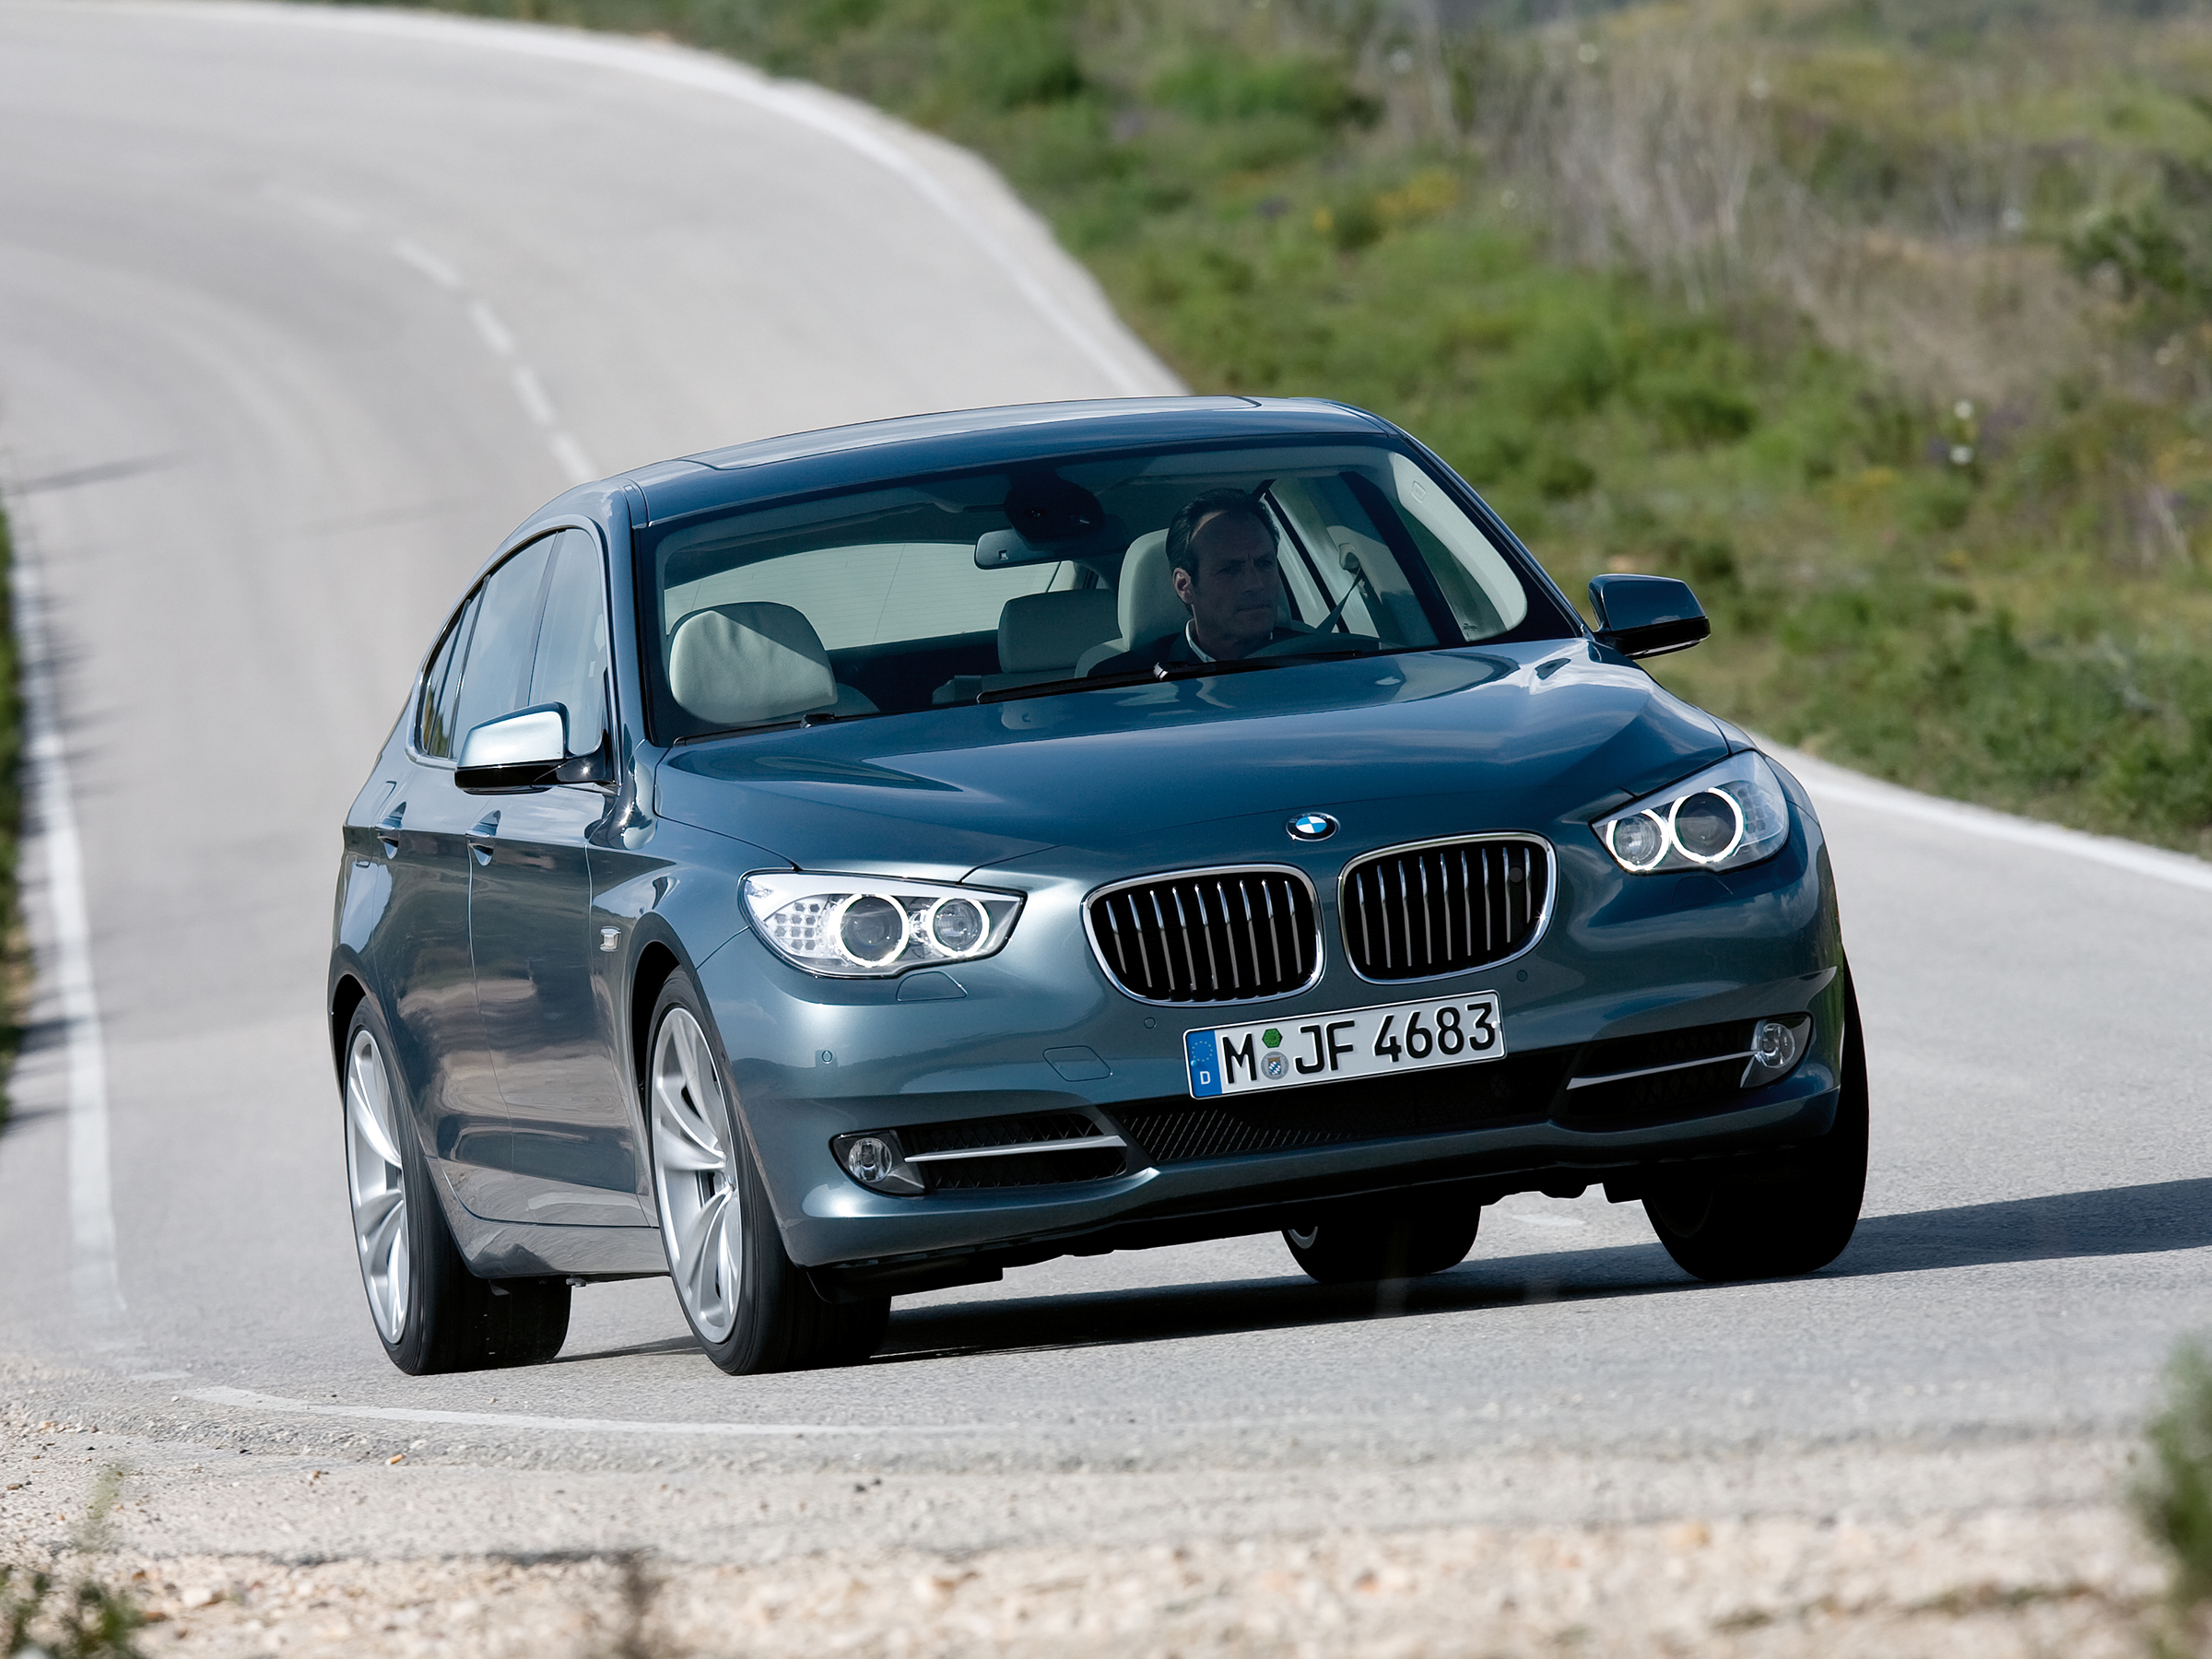 BMW, cars, roads, vehicles, BMW 5 GT, German cars - desktop wallpaper